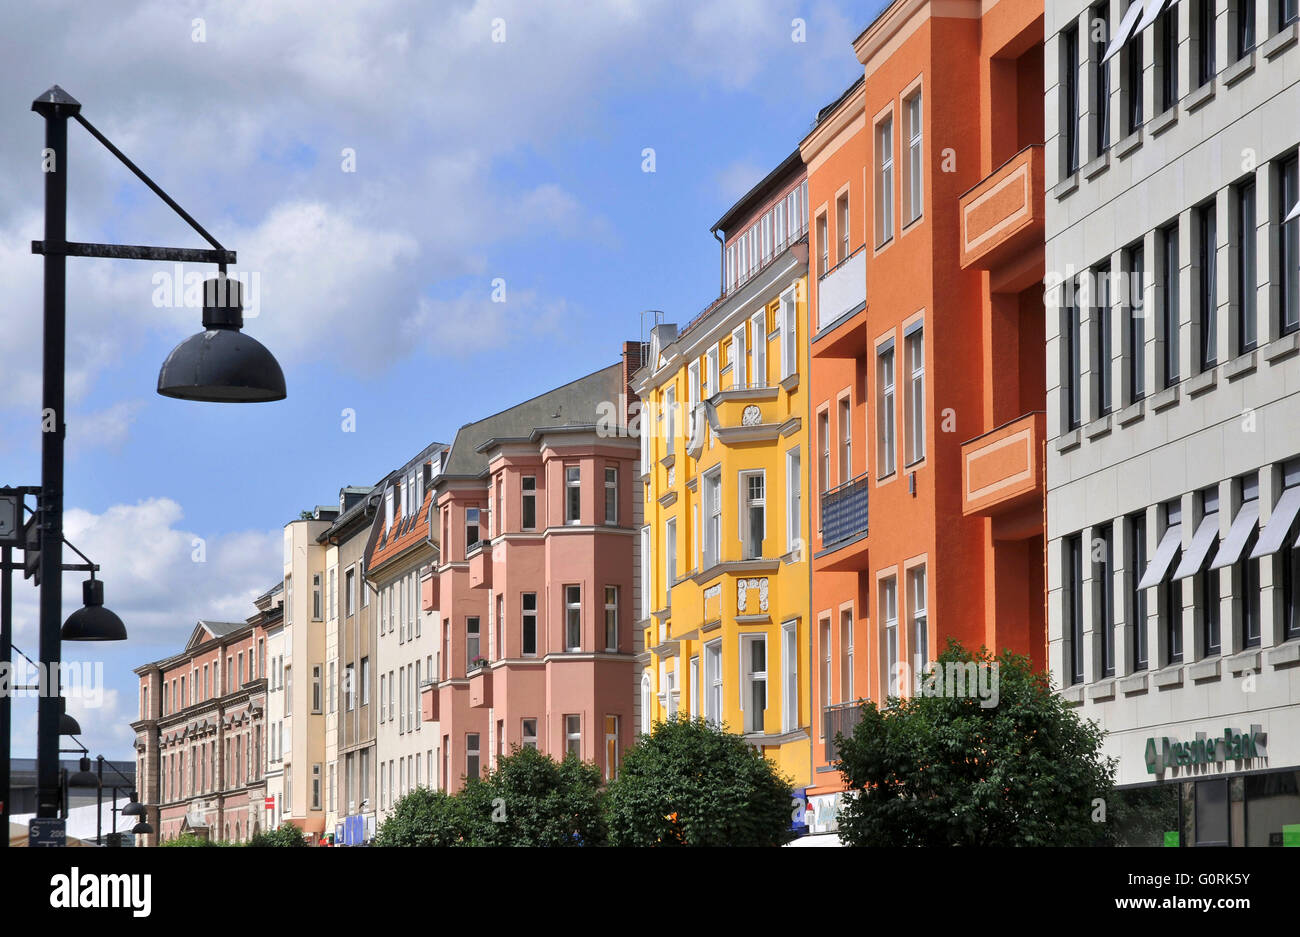 Houses, facades, Carl-Schurz-Strasse, olt town, Spandau, Berlin, Germany Stock Photo